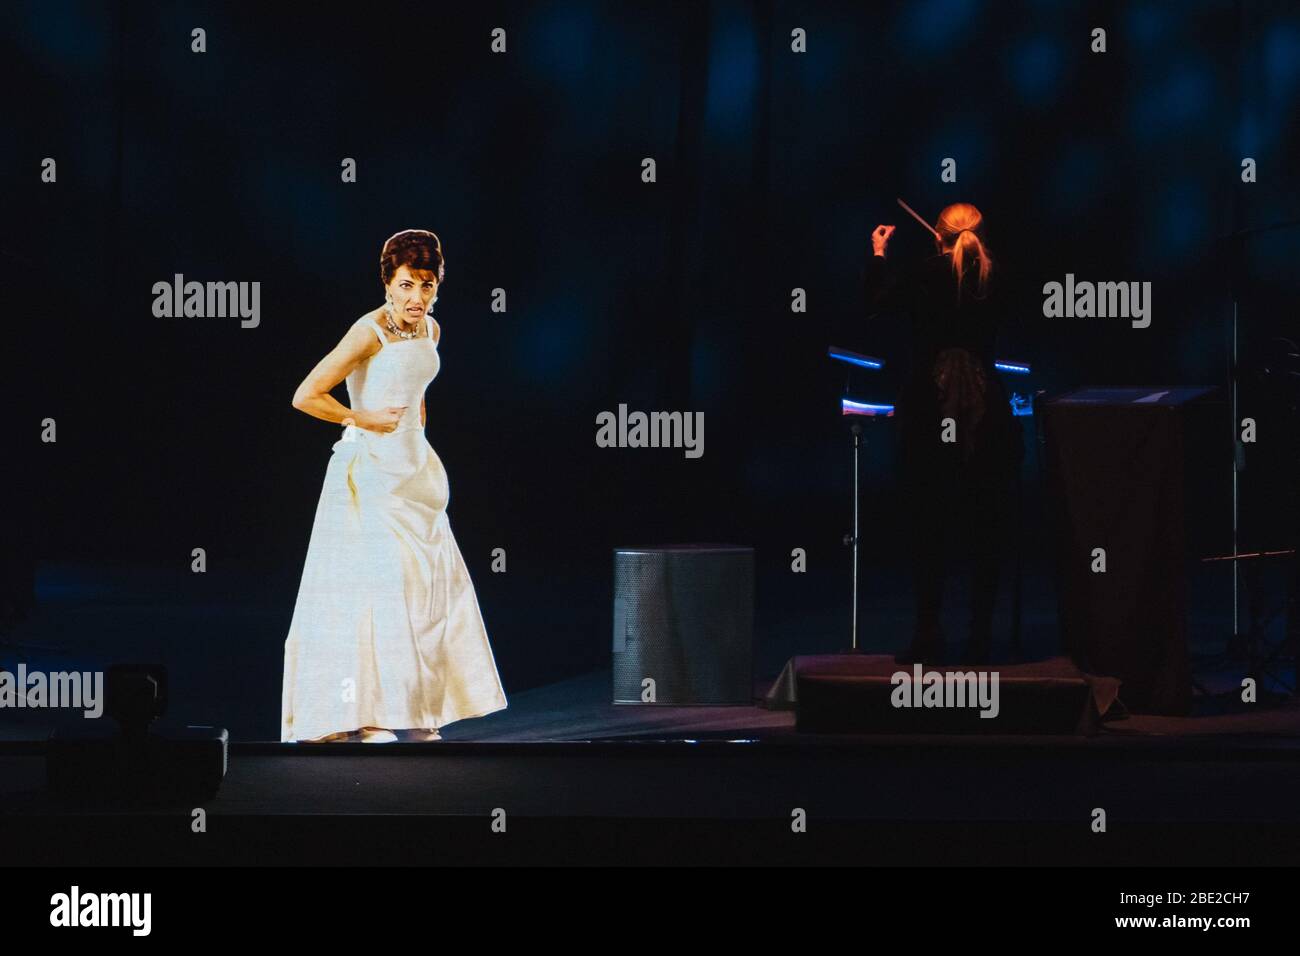 Maria Callas pendant Maria Callas - Hologram Tour, Gran Teatro Geox,  Padoue, Italie, 15 nov. 2019 Photo Stock - Alamy